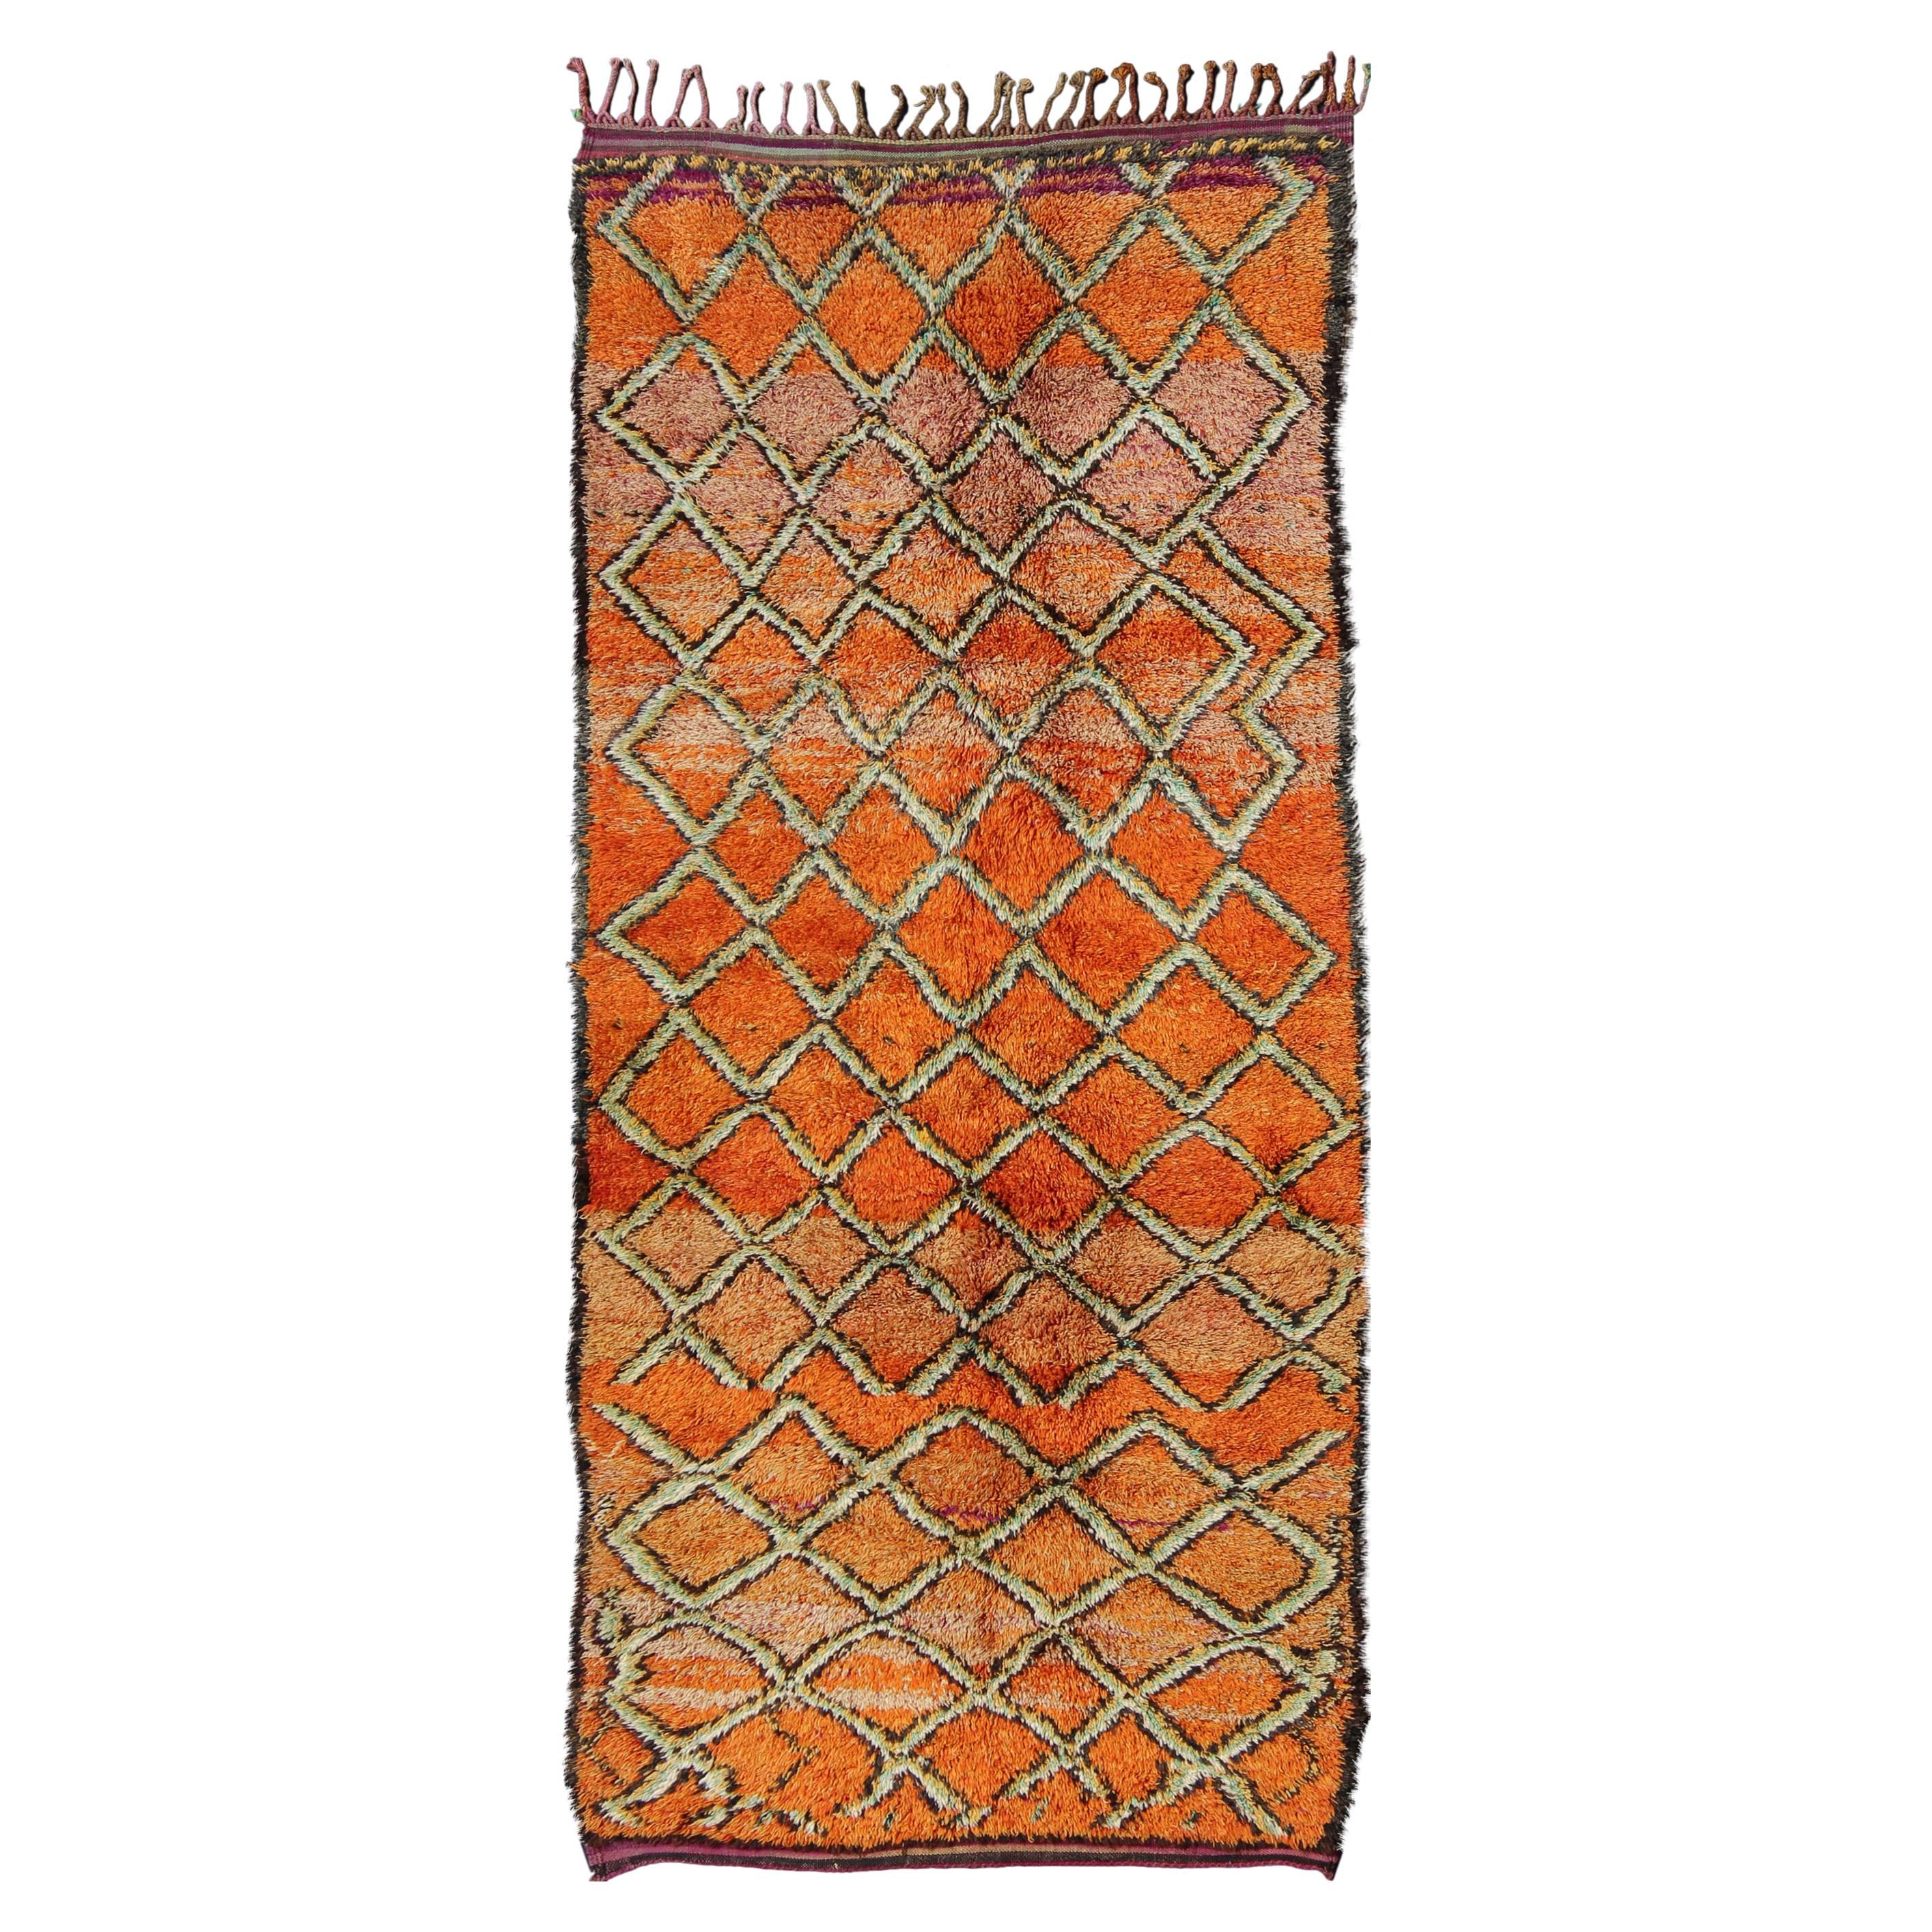 Wide Runner, Vintage Moroccan Gallery Rug with Diamond Design in Orange & Green